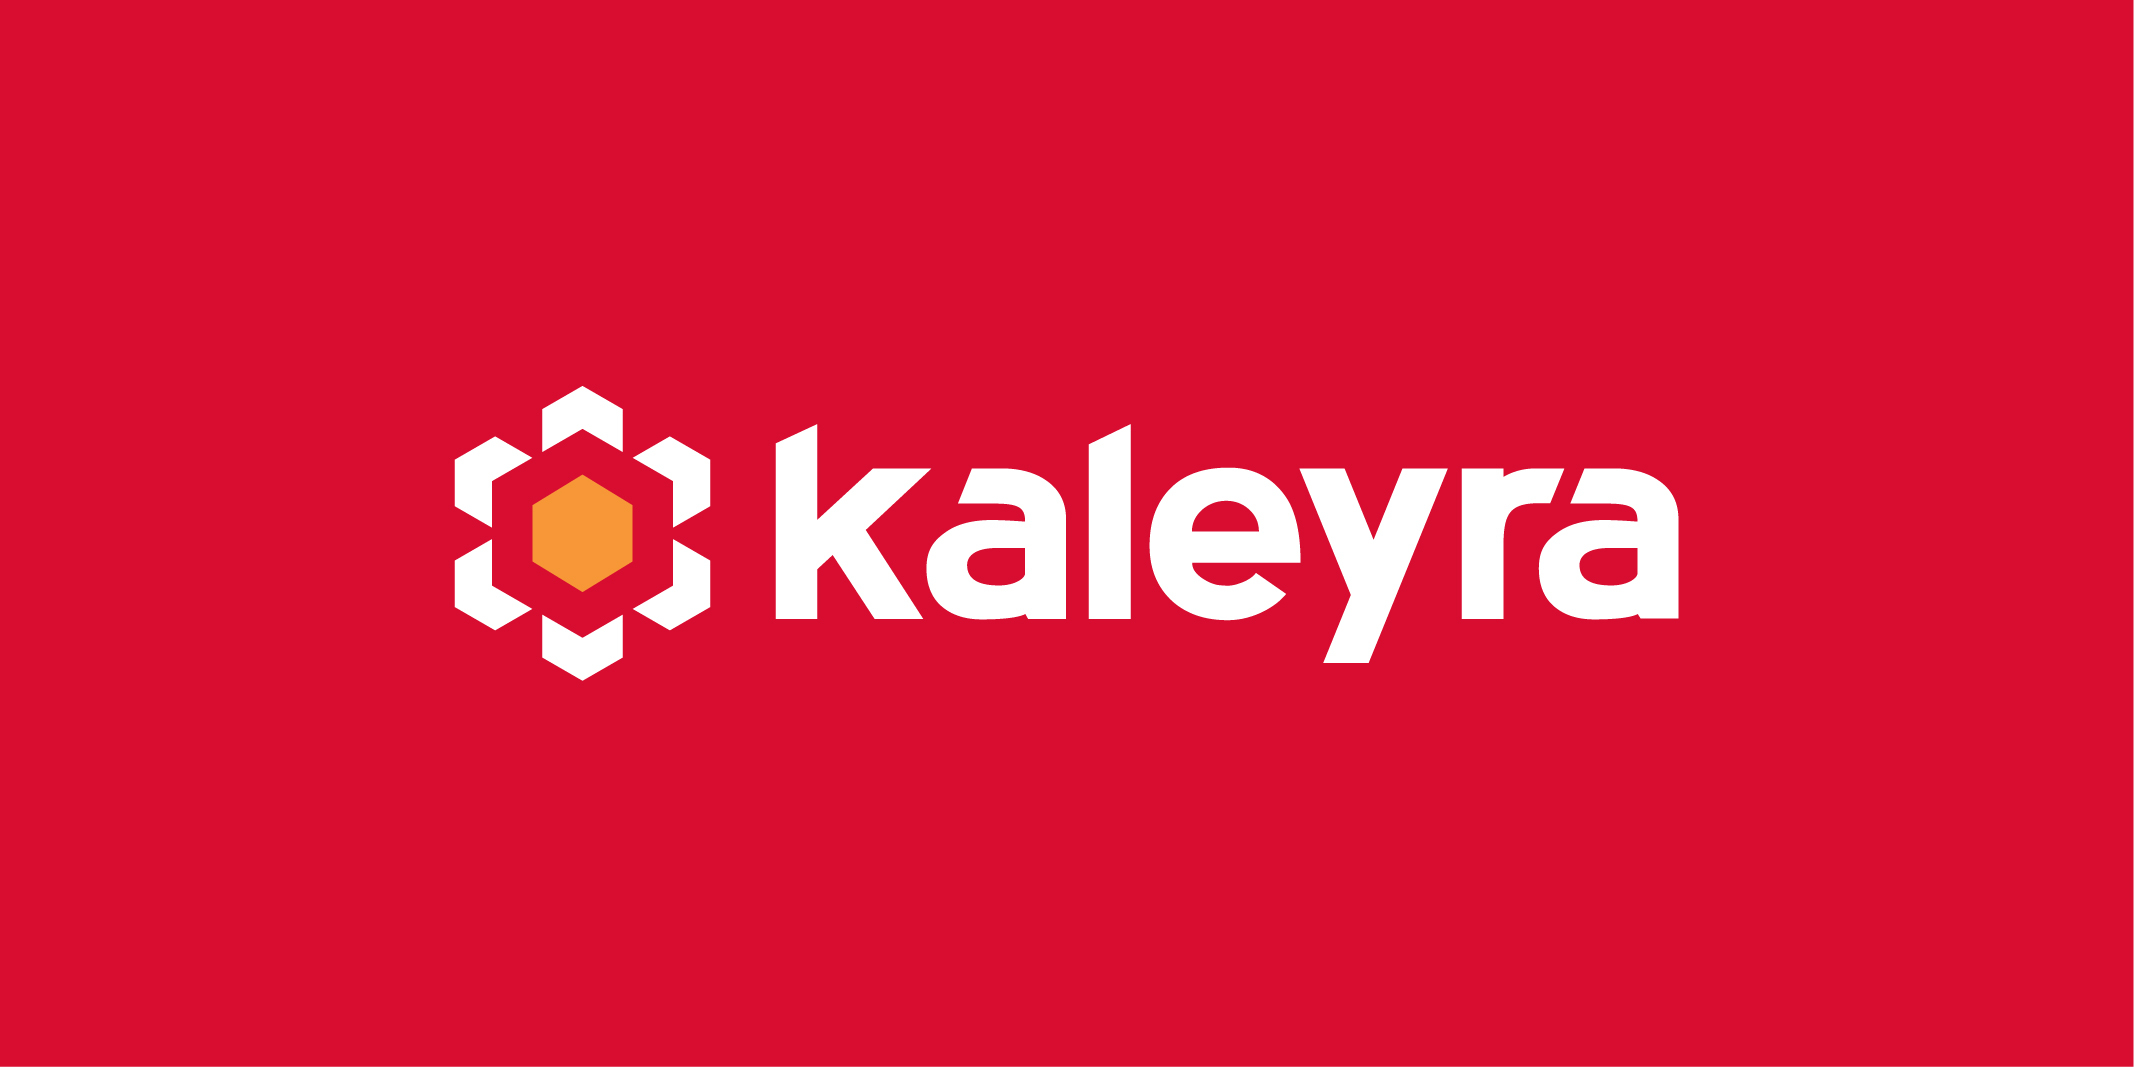 Kaleyra’s Response to the Ukrainian Crisis